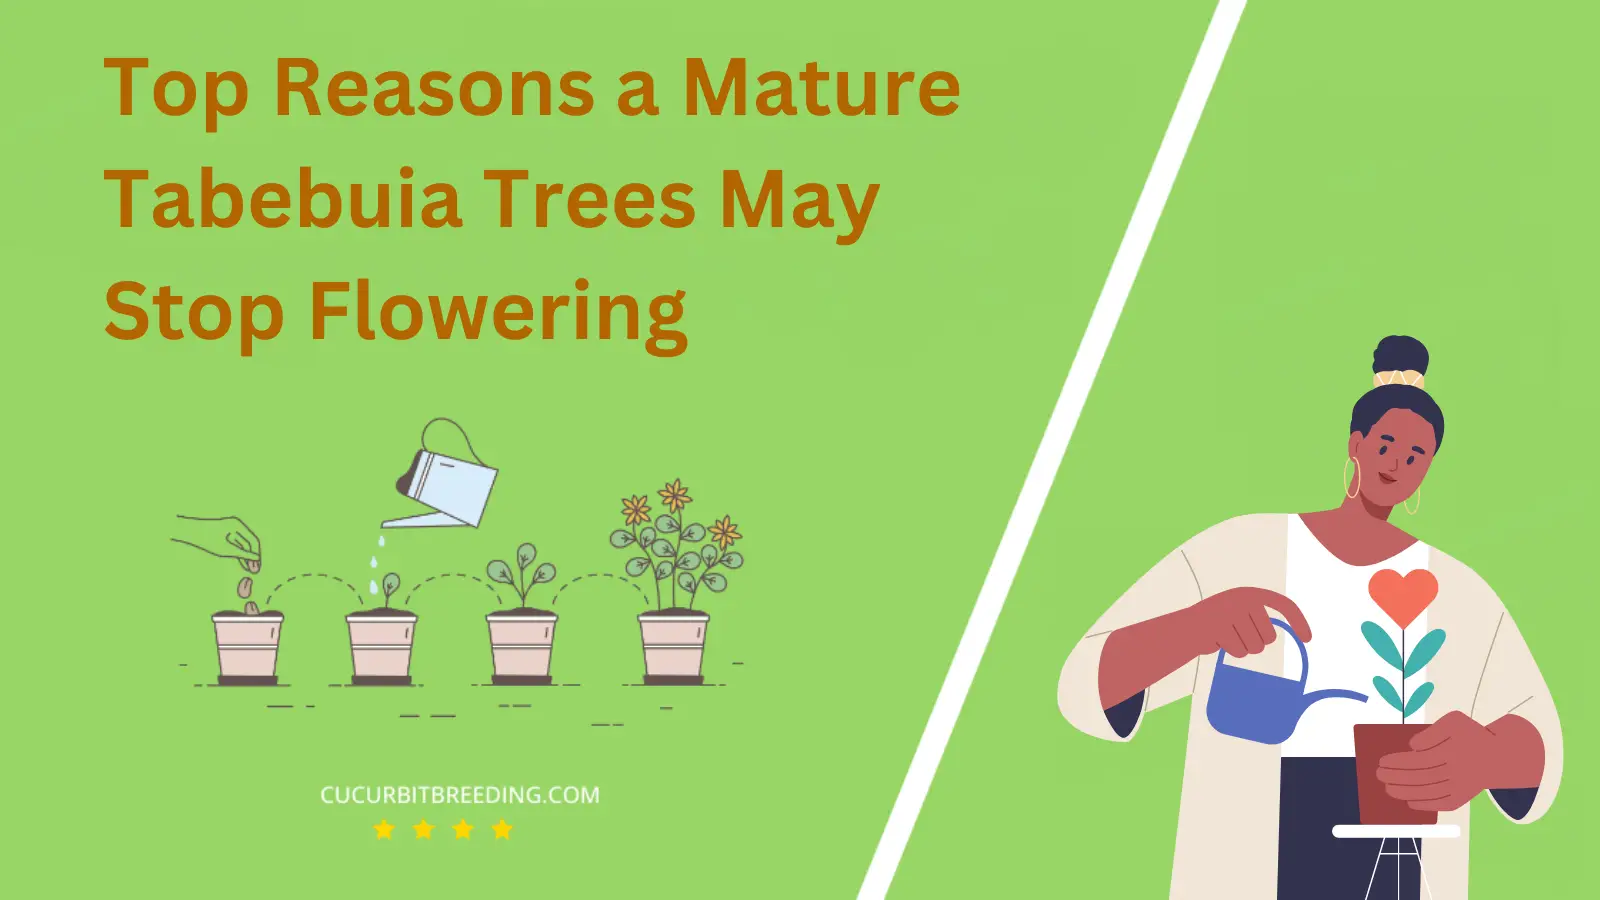 Top Reasons a Mature Tabebuia Trees May Stop Flowering